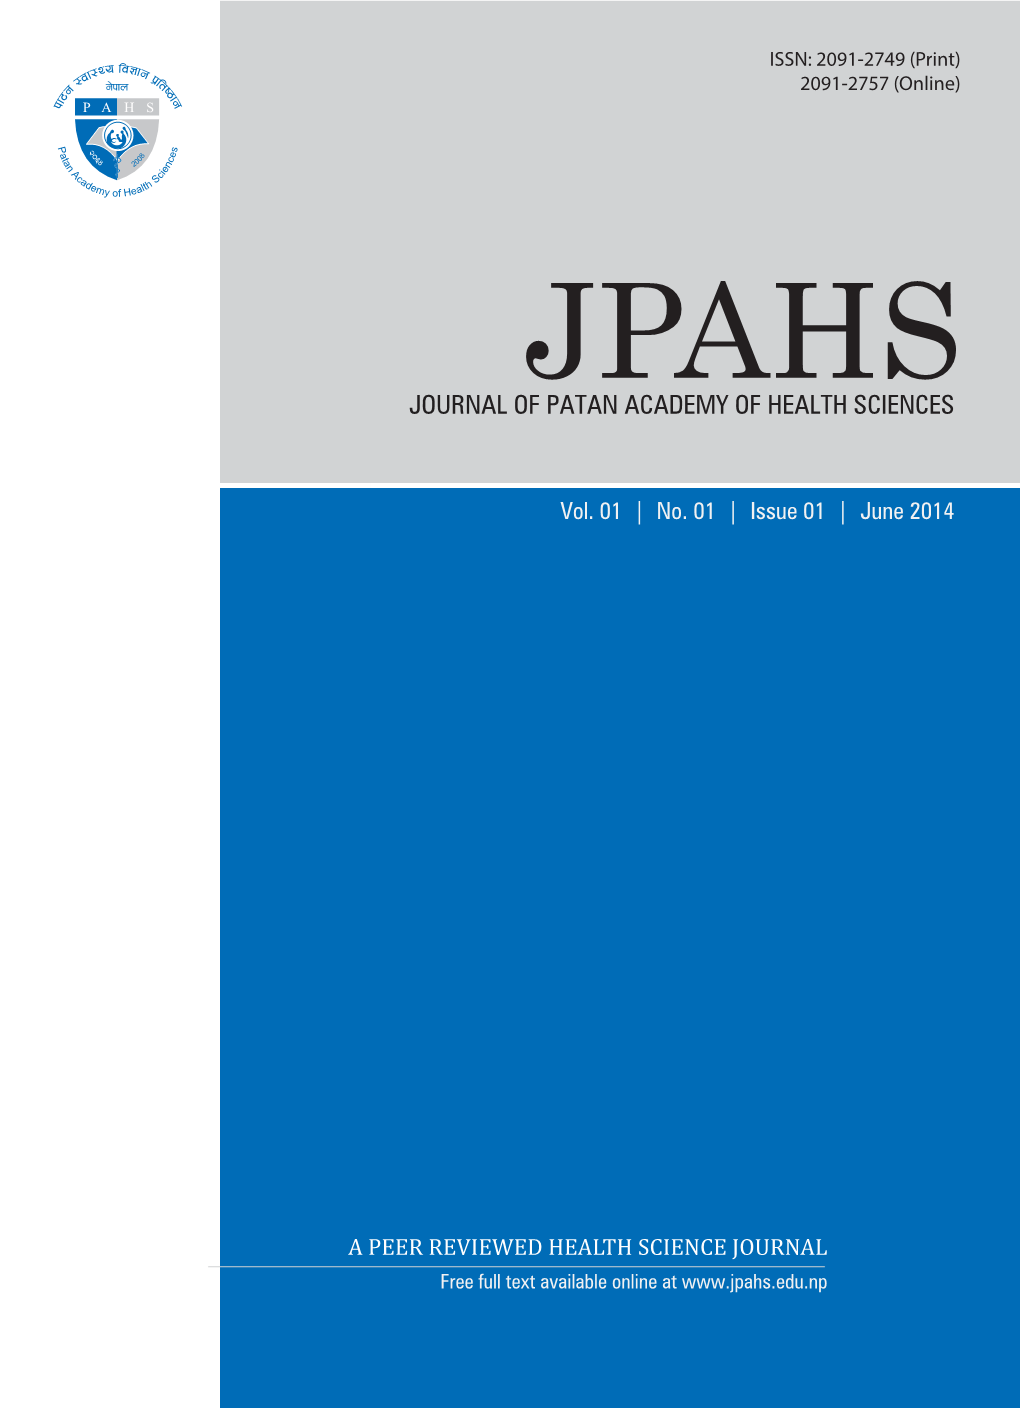 JPAHS-Vol-I-Issue-I-June-2014.Pdf